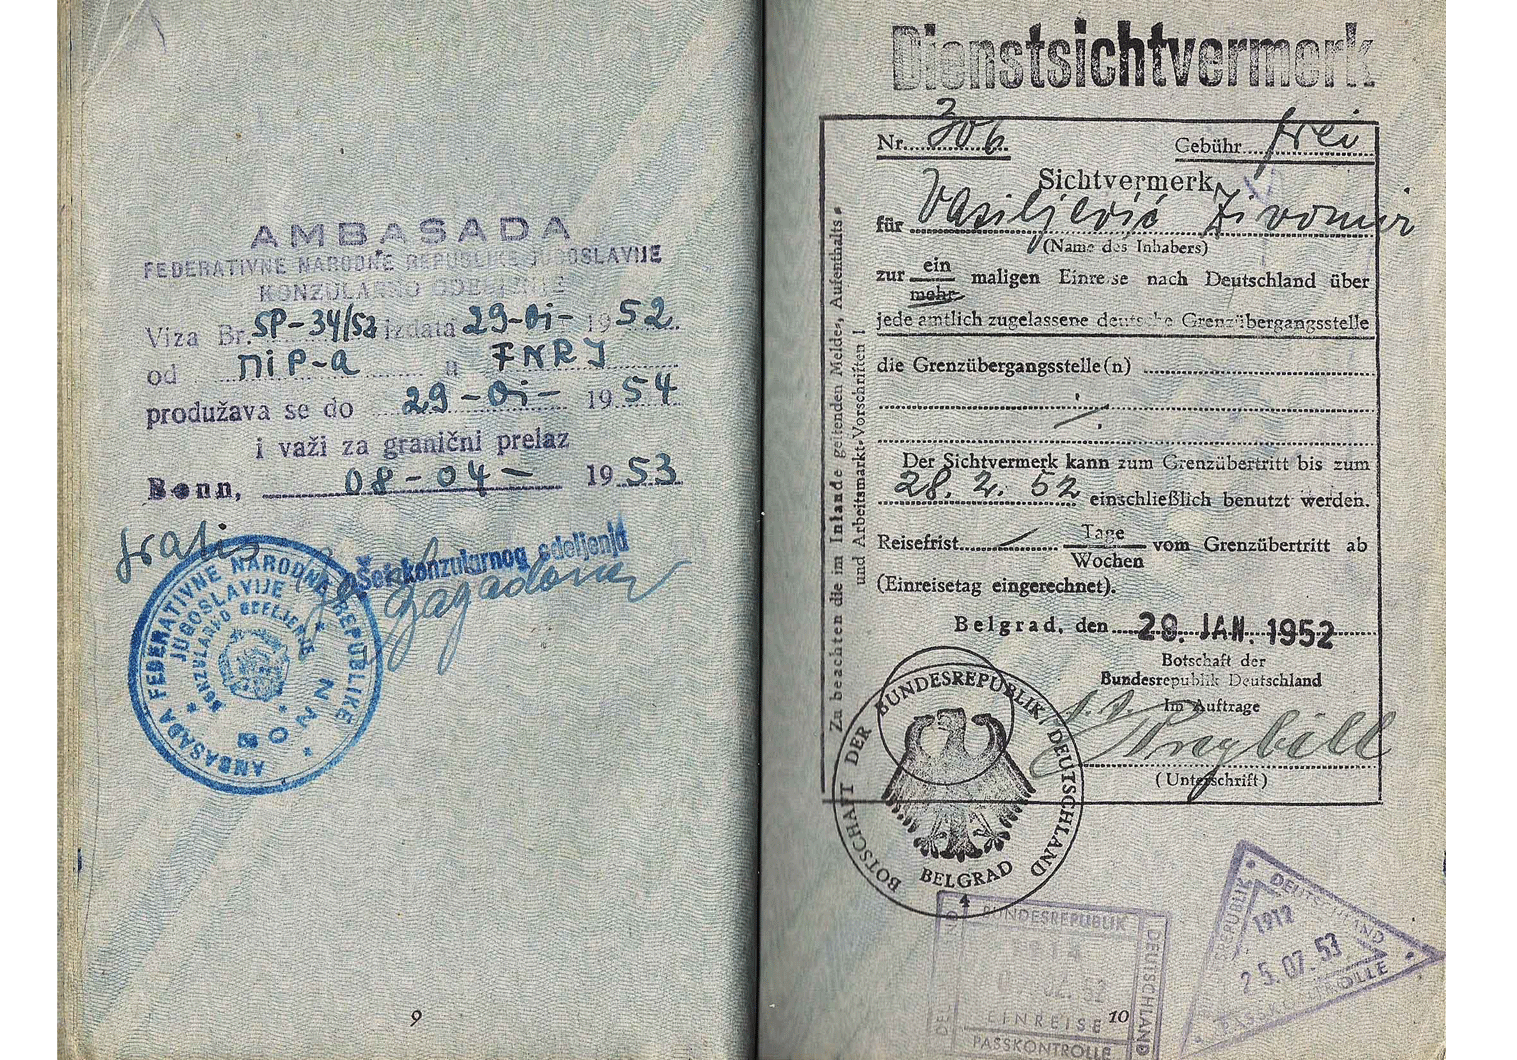 Cold-War service passport from 1952